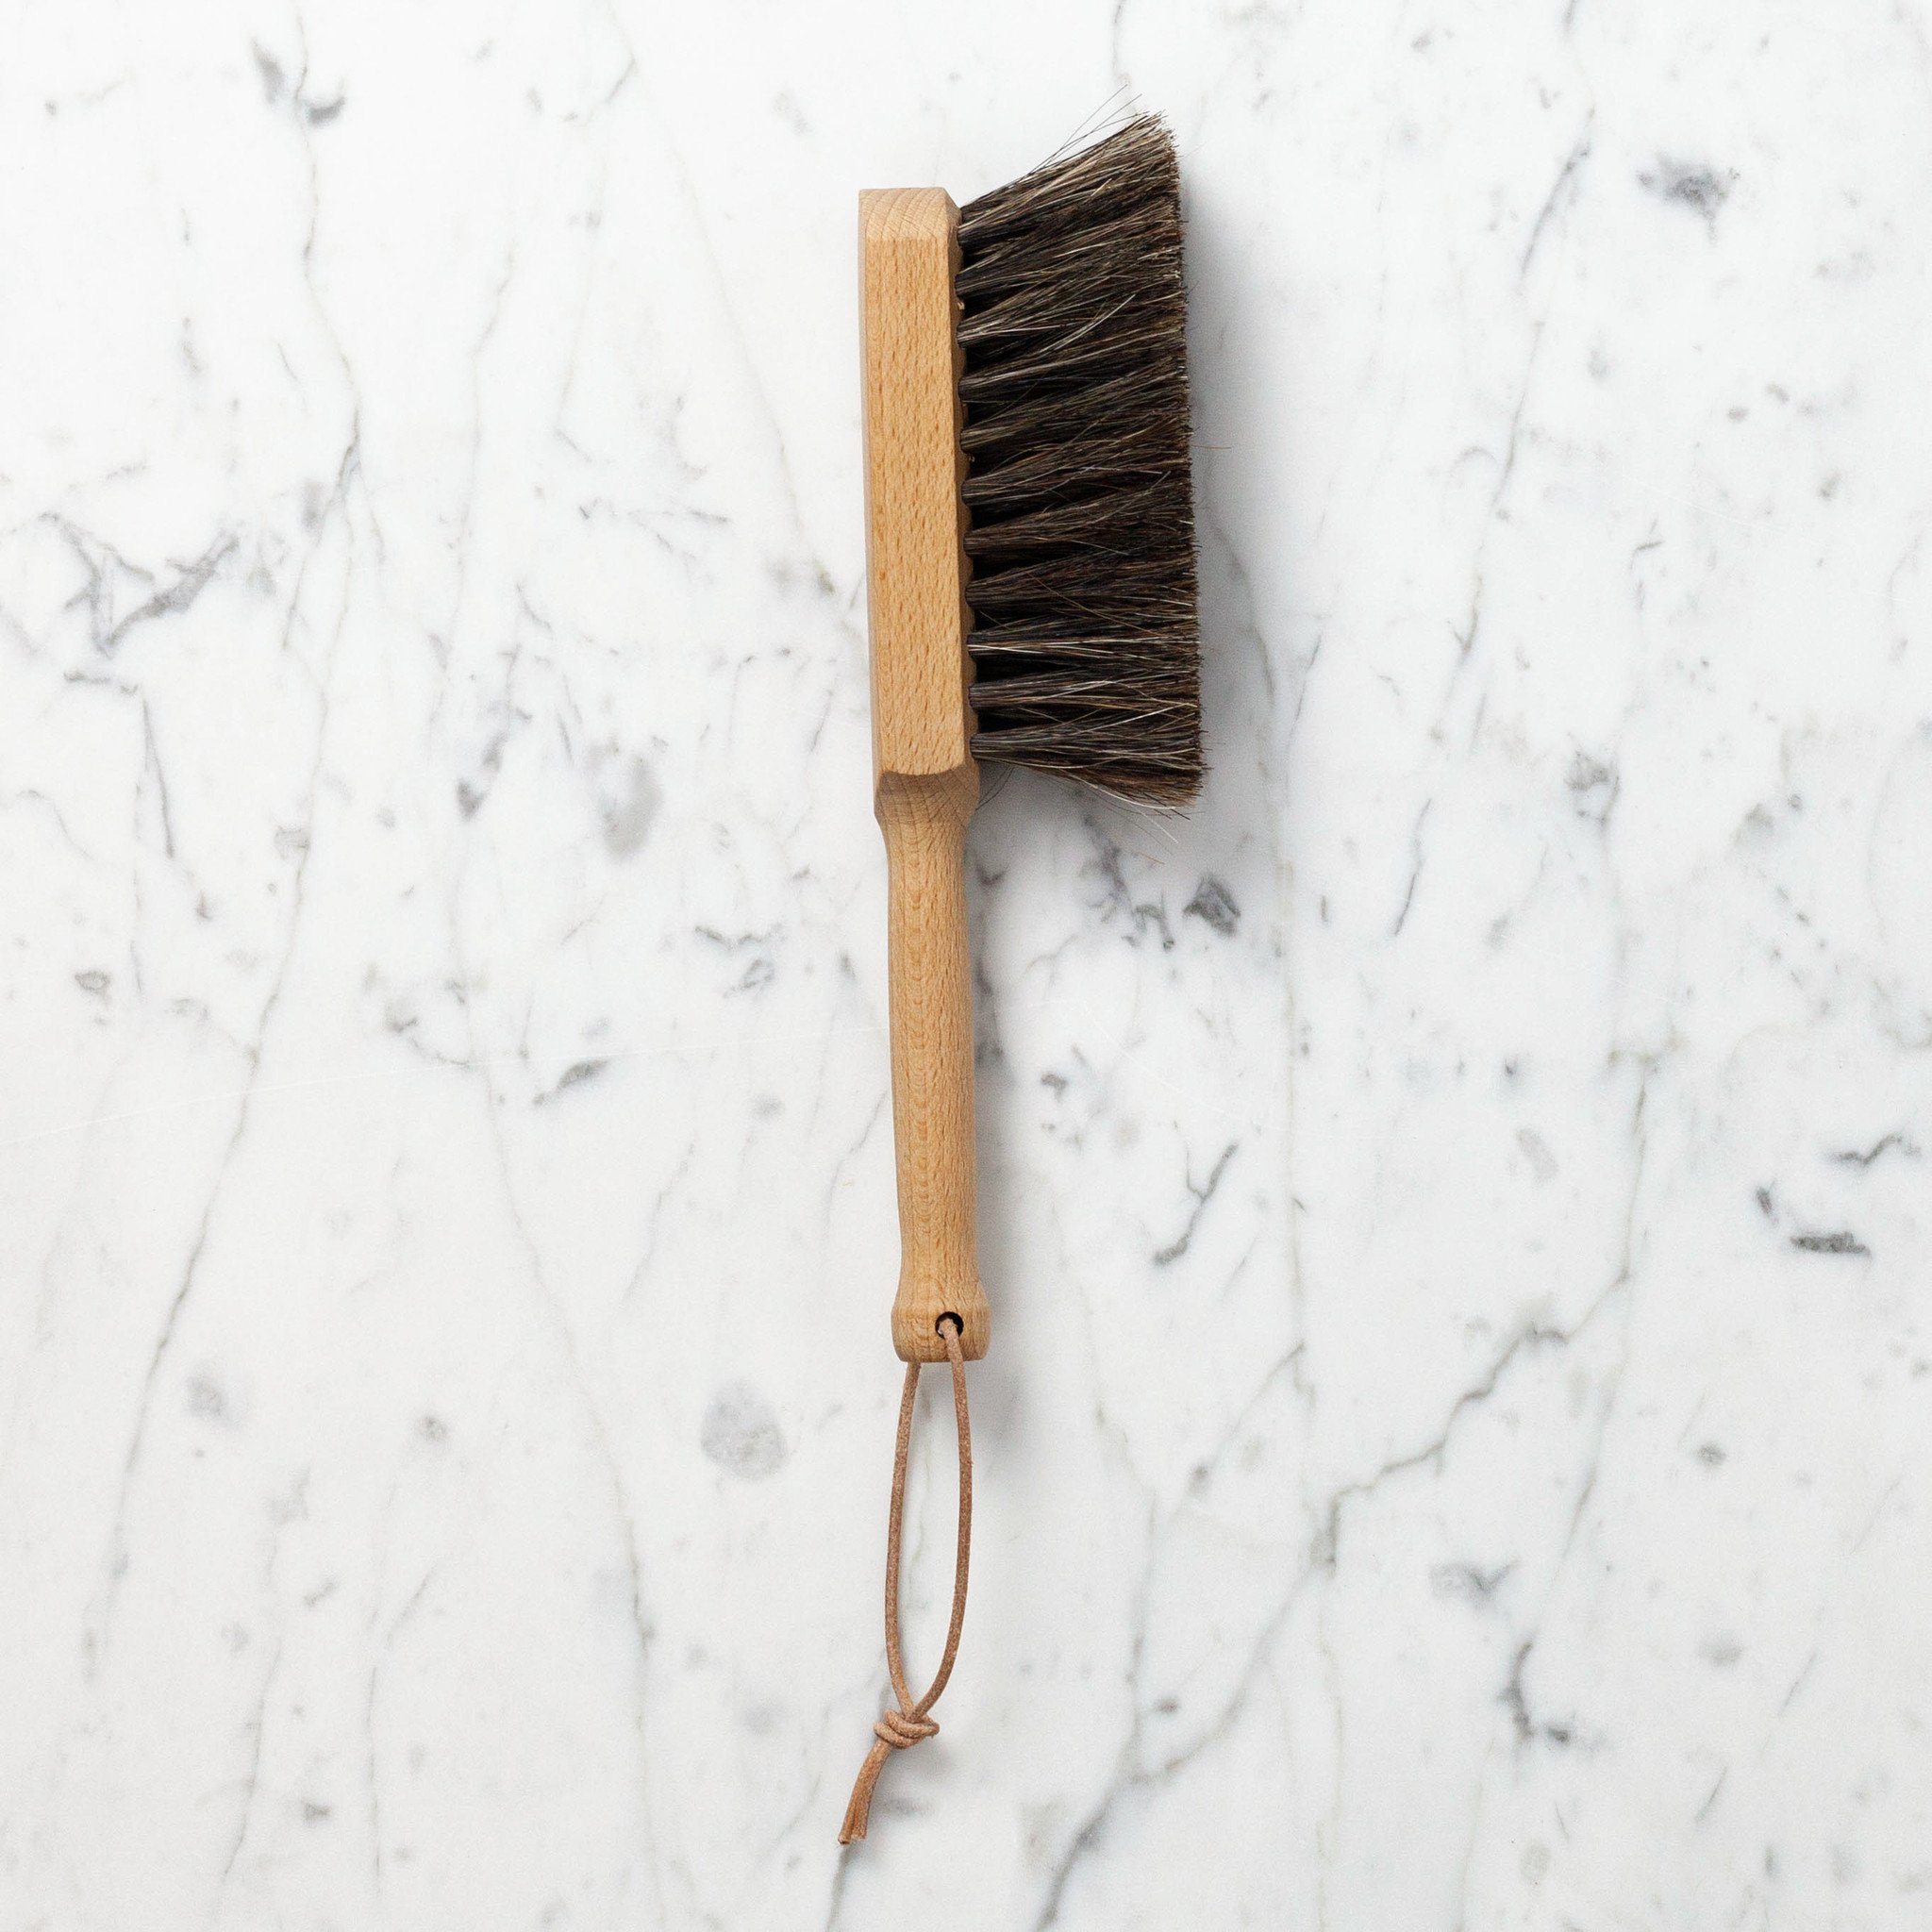 Children's Hand Broom with Horsehair Bristles - 8"